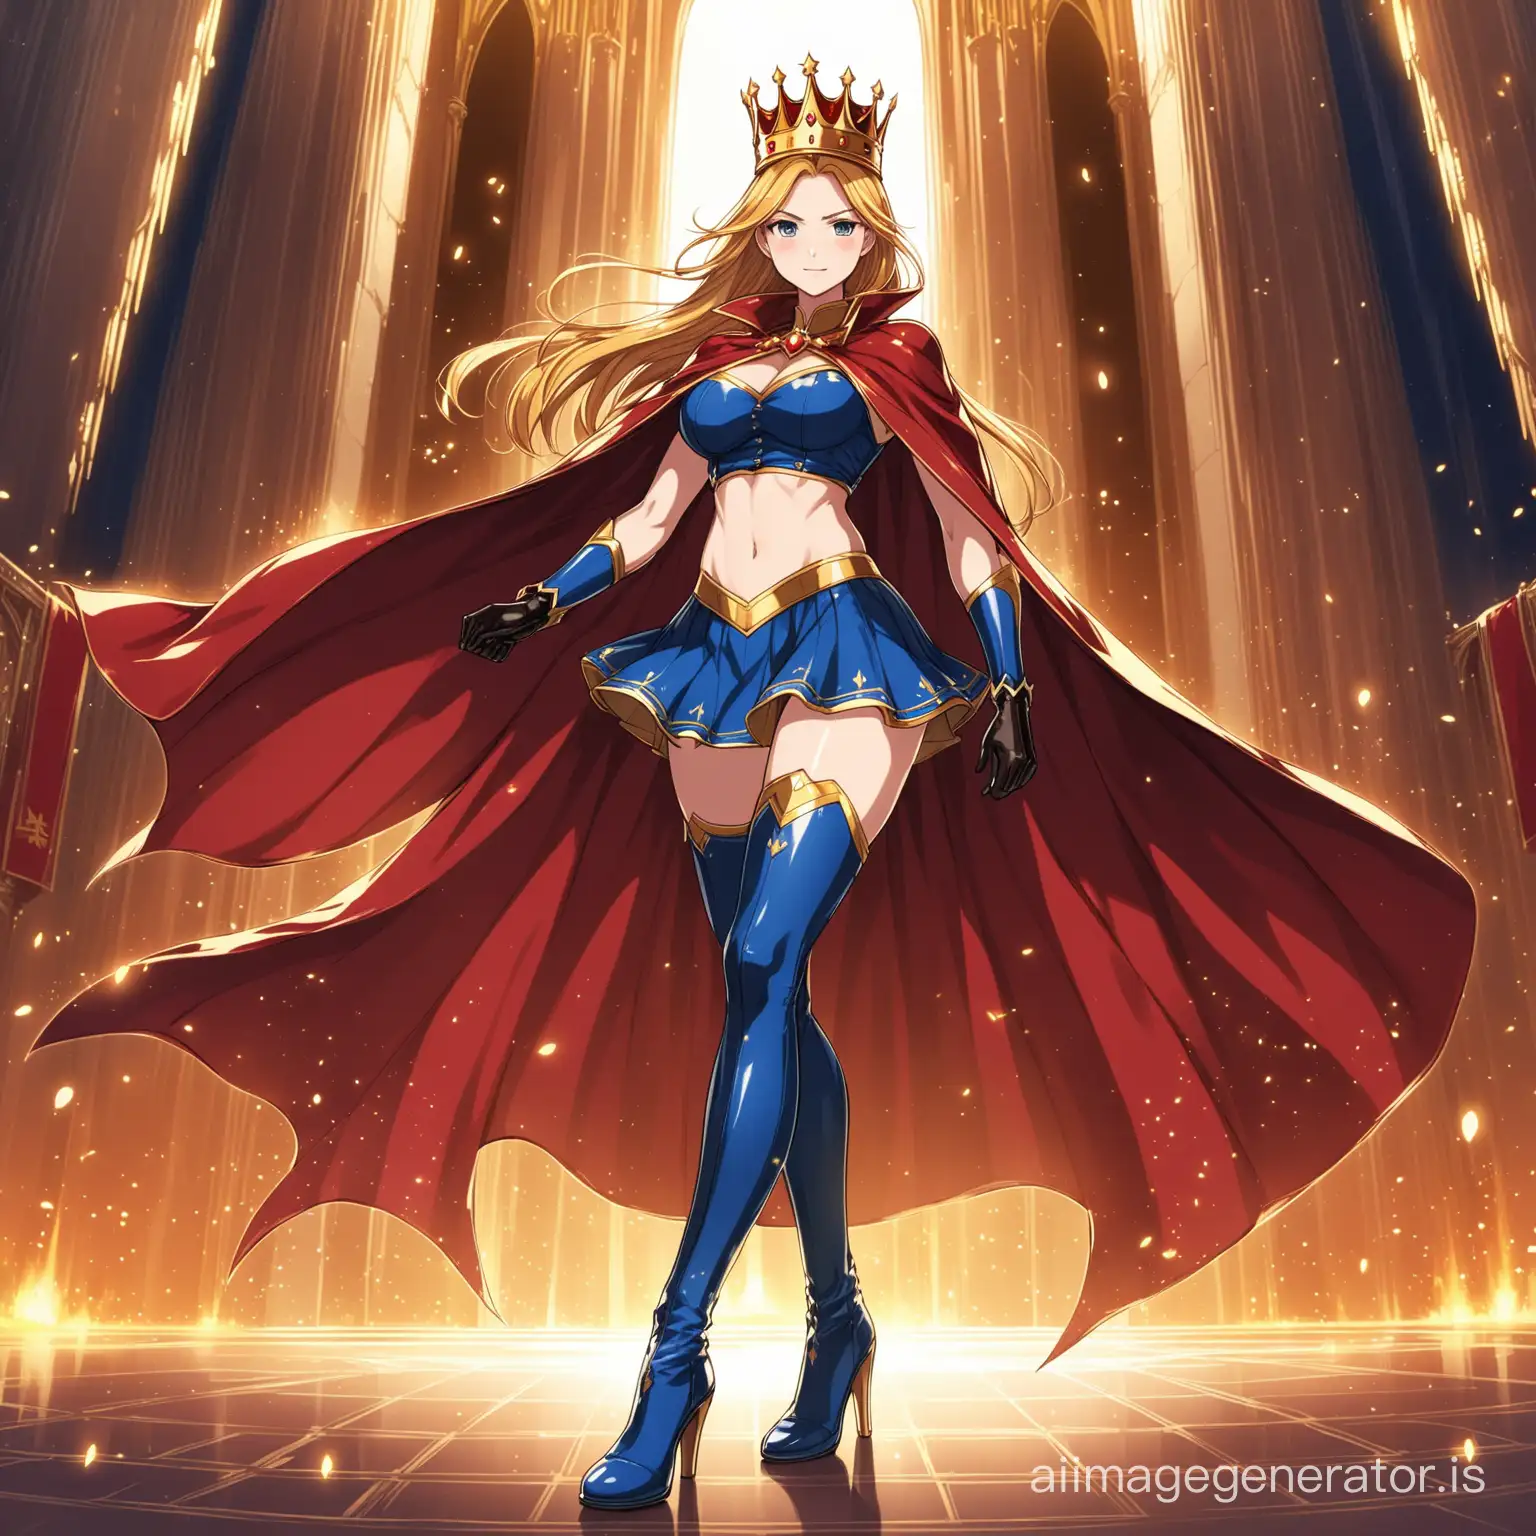 Royal-Superhero-Anime-Girl-in-Elegant-Costume-and-Crown